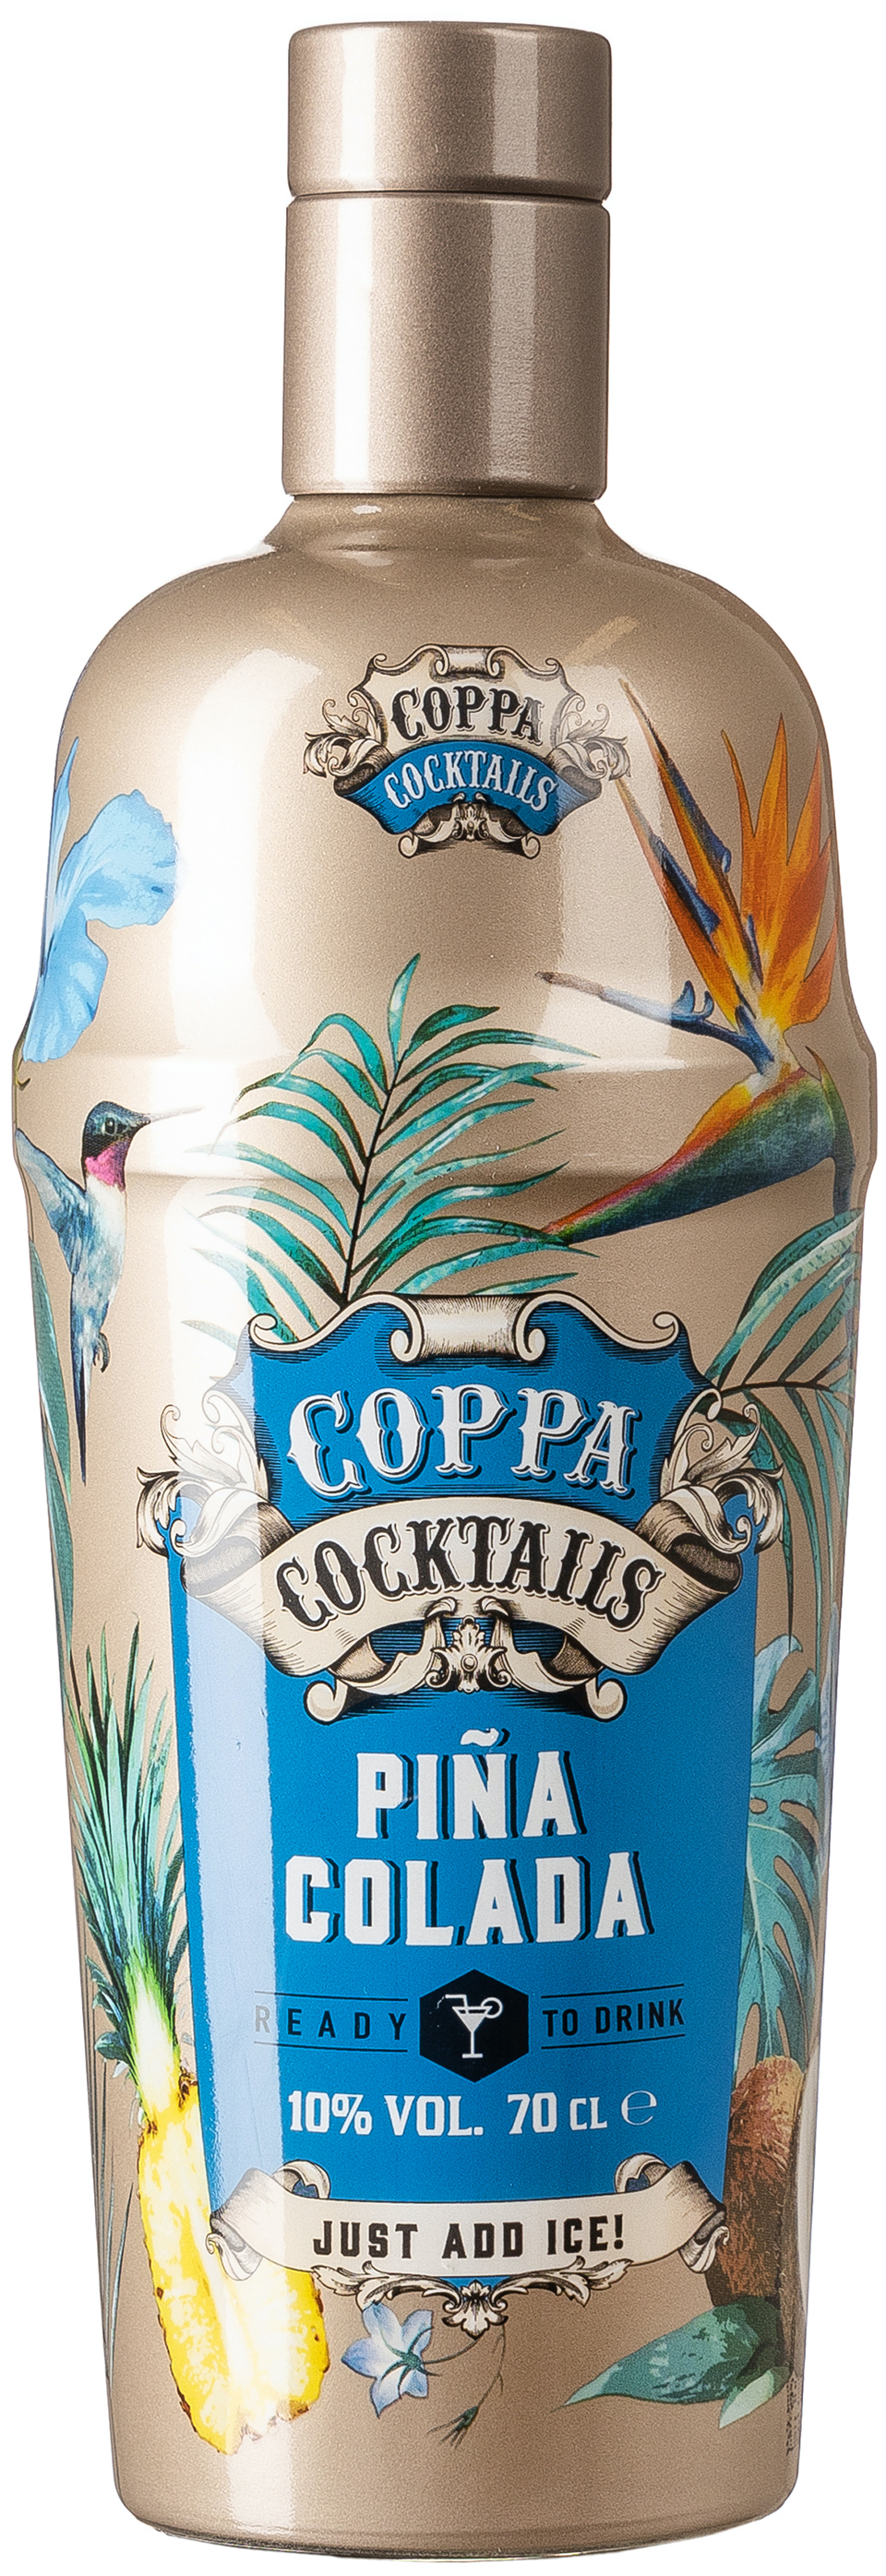 Coppa Cocktails Pina Colada 10% vol. 0,7 L